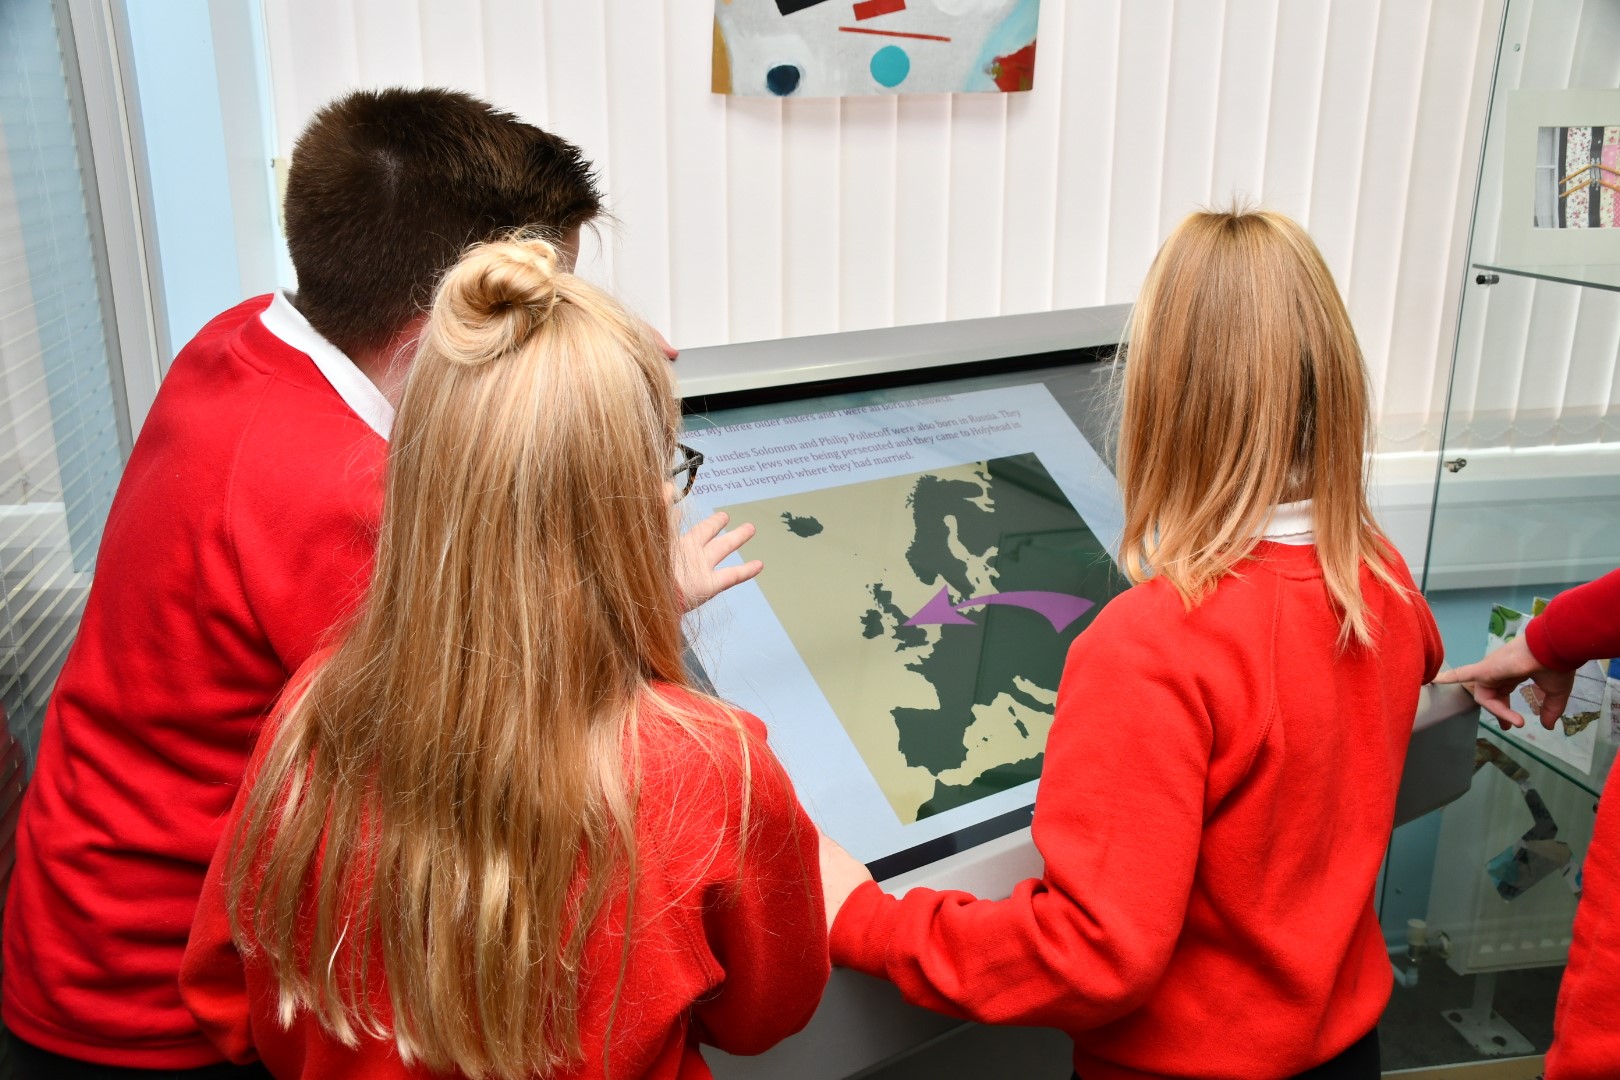 Three school children touching an interactive screen in an exhibition